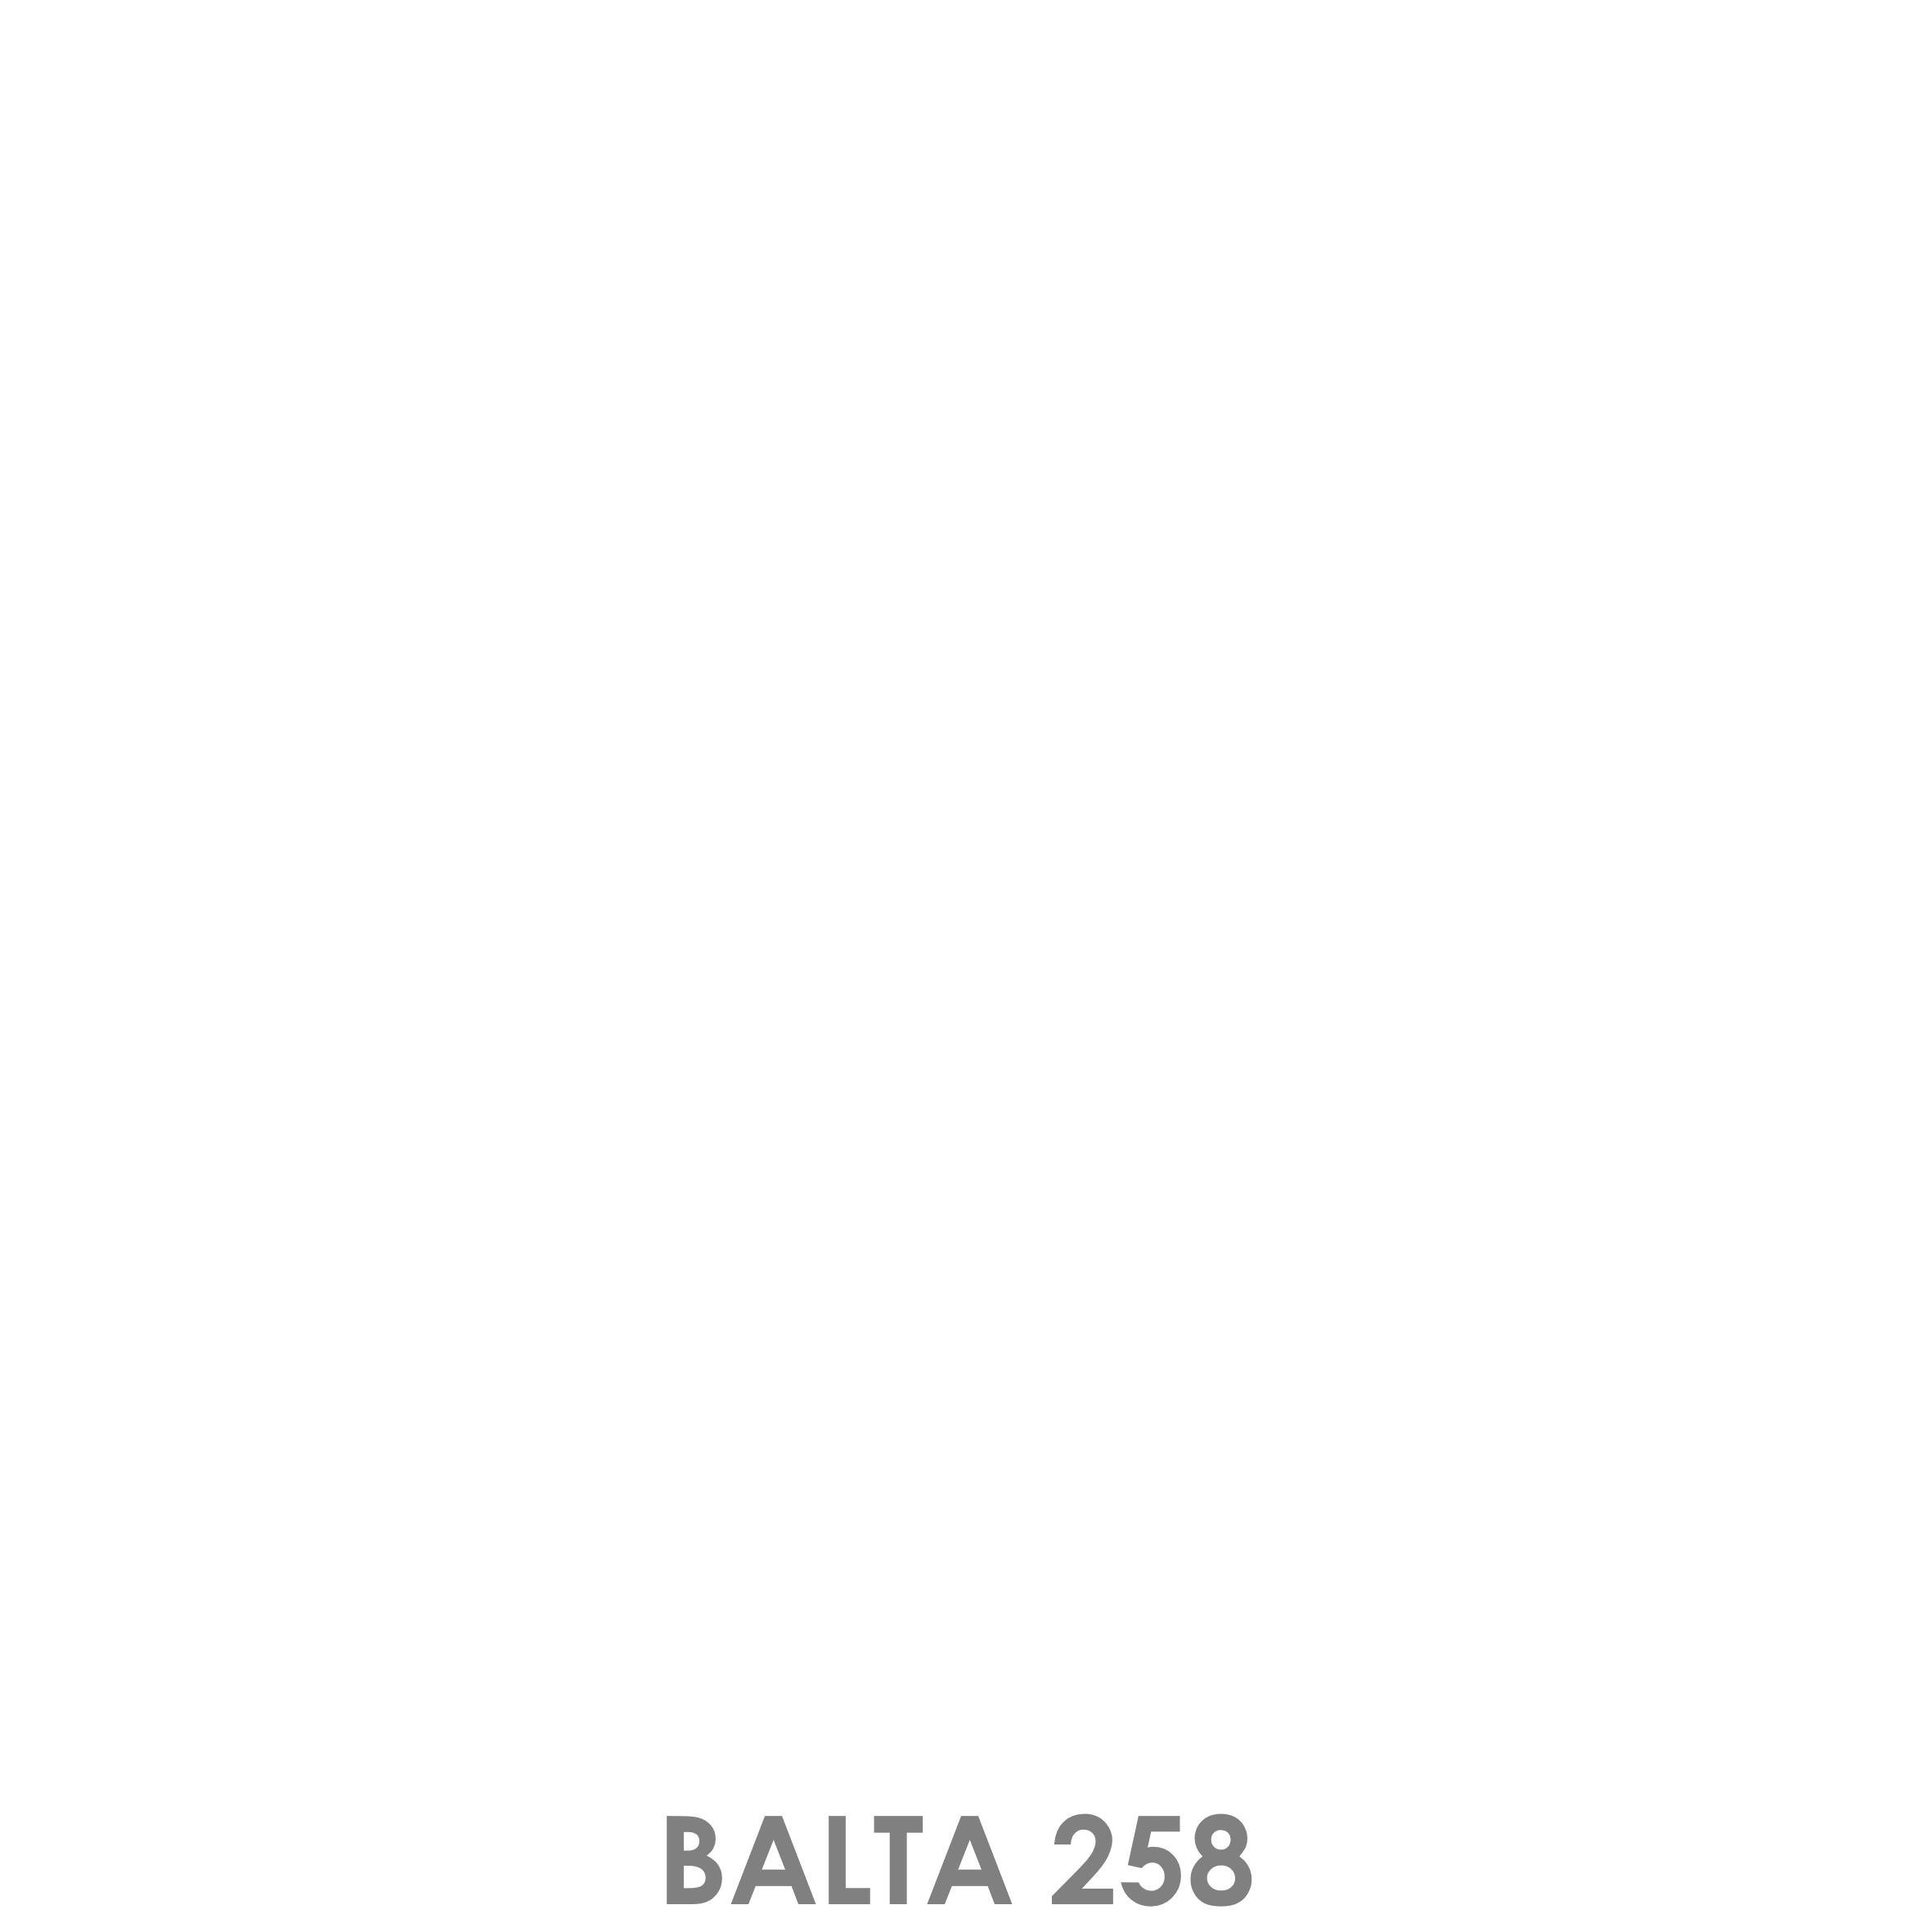 Balta 